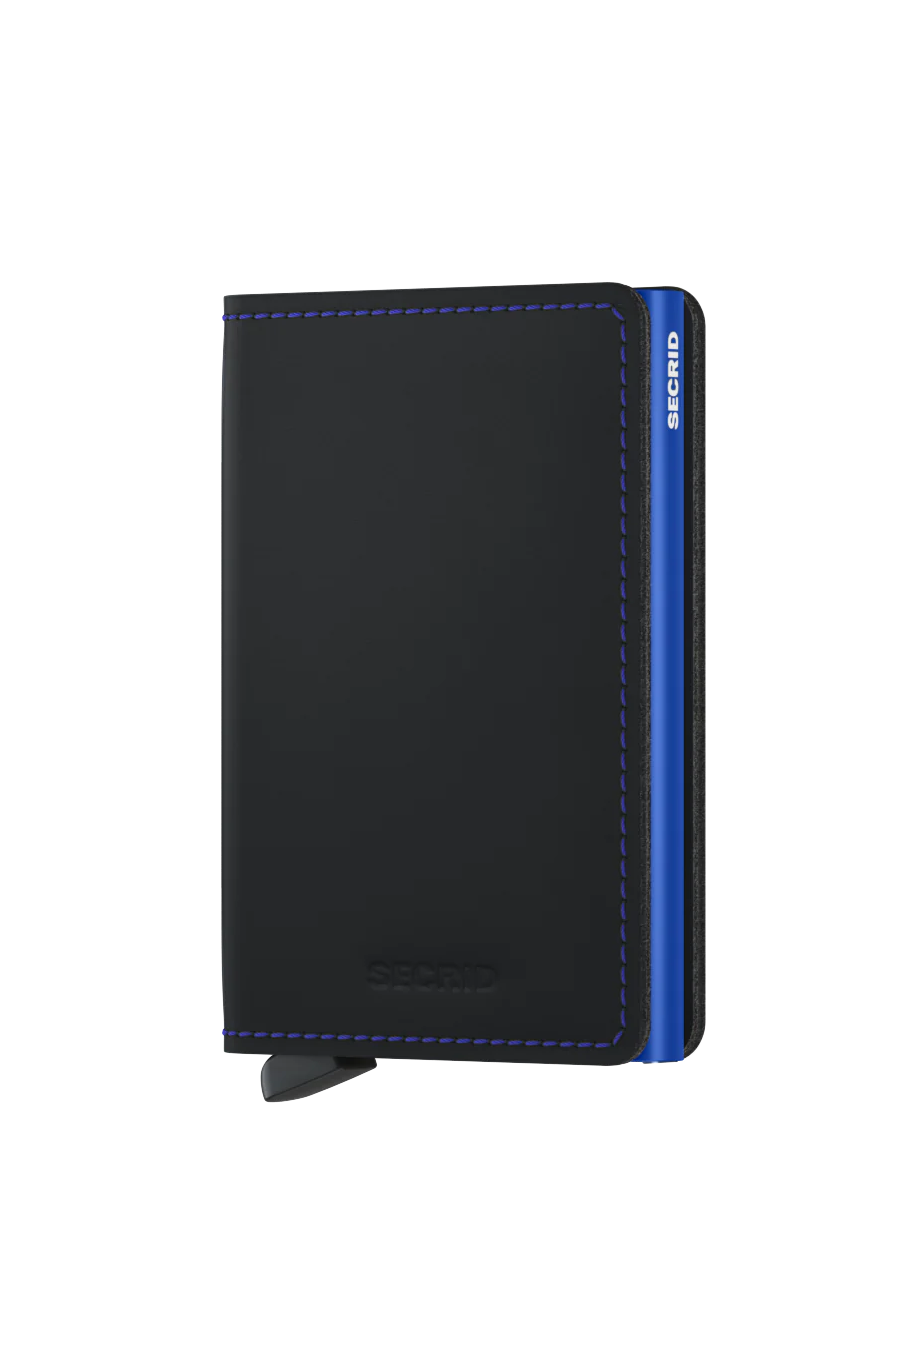 Secrid Slim Wallet Matte - Black / Blue